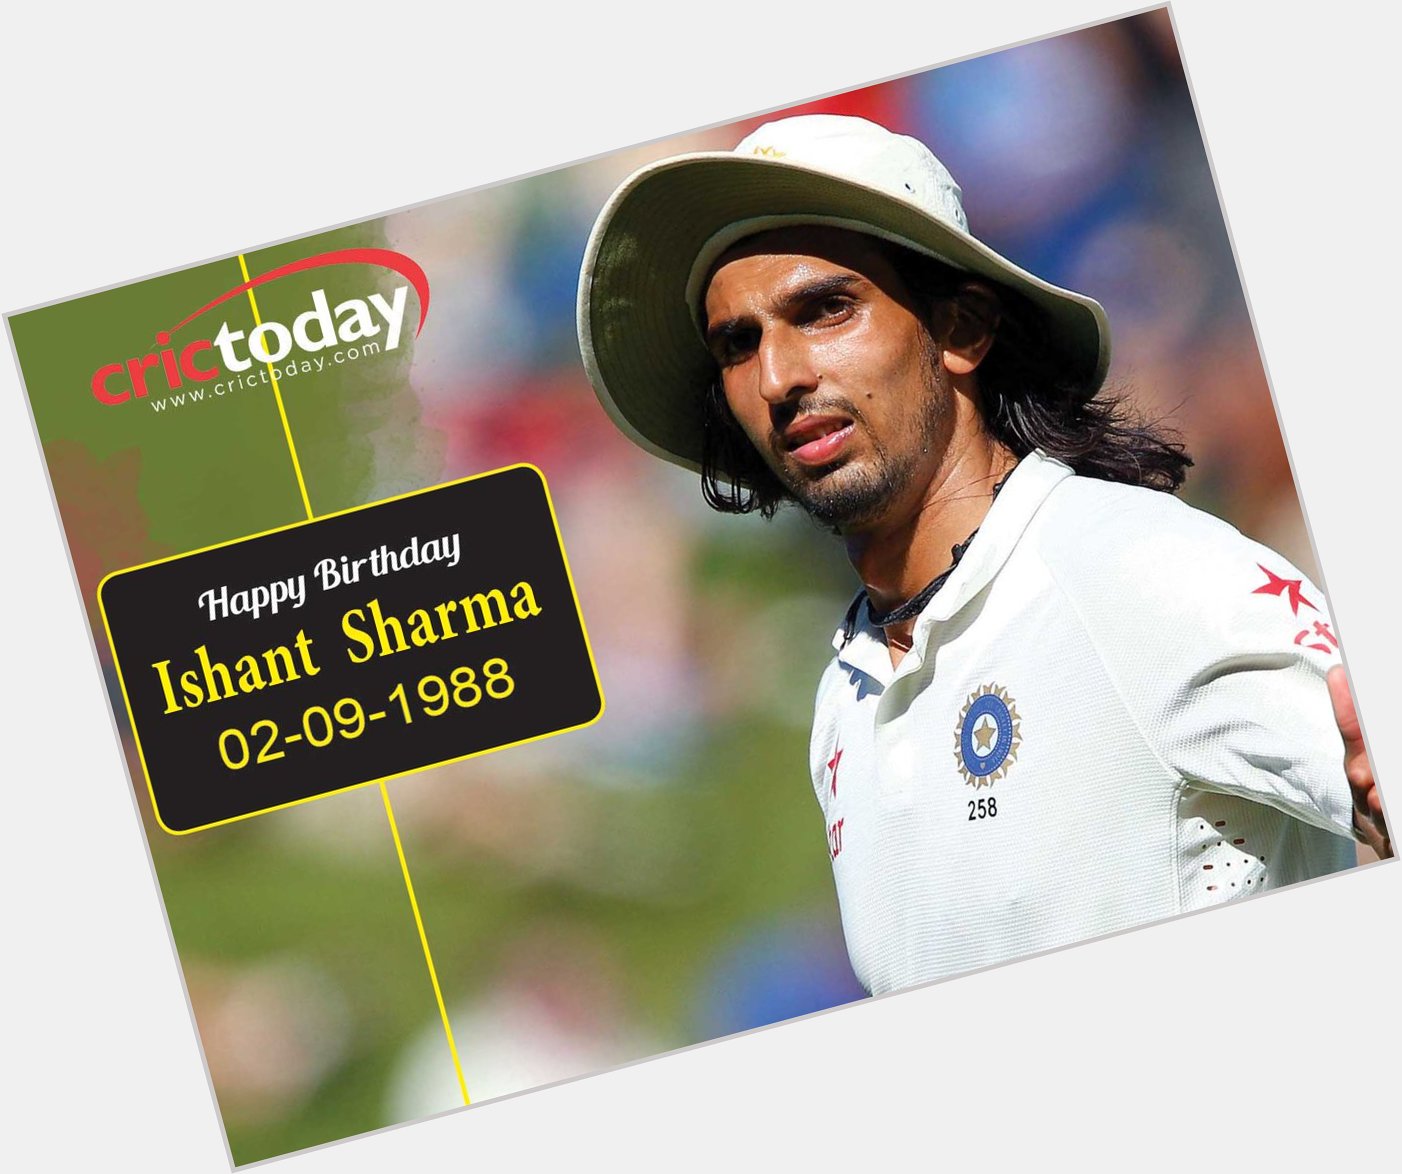 Wishing Ishant Sharma a very happy birthday..... 